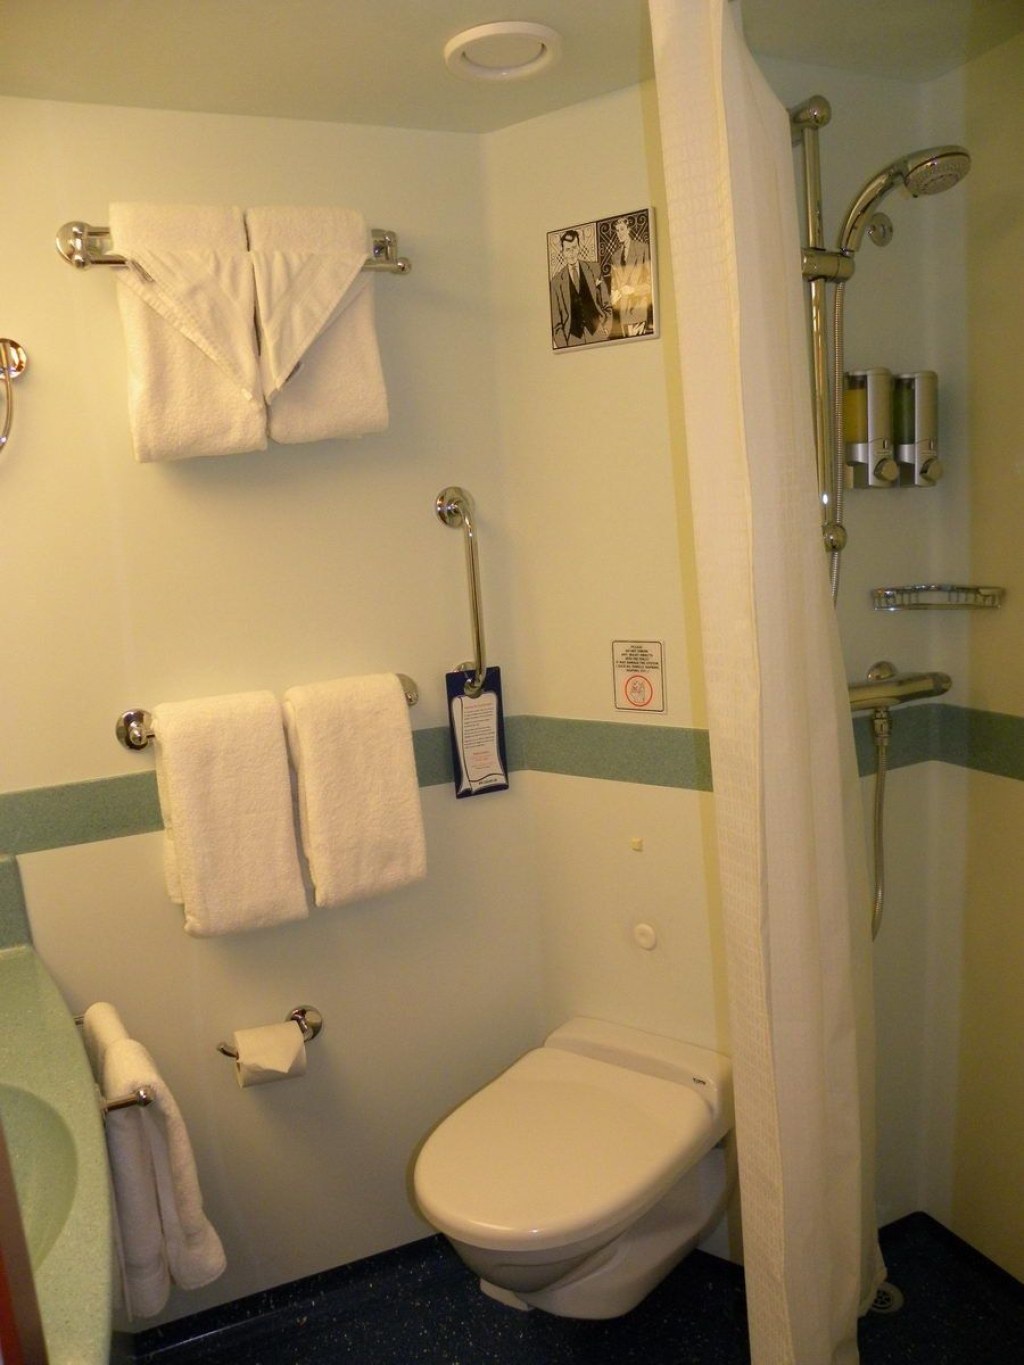 small cruise ship bathroom - Cruise ships  Tiny bathroom, Small spaces, Cruise